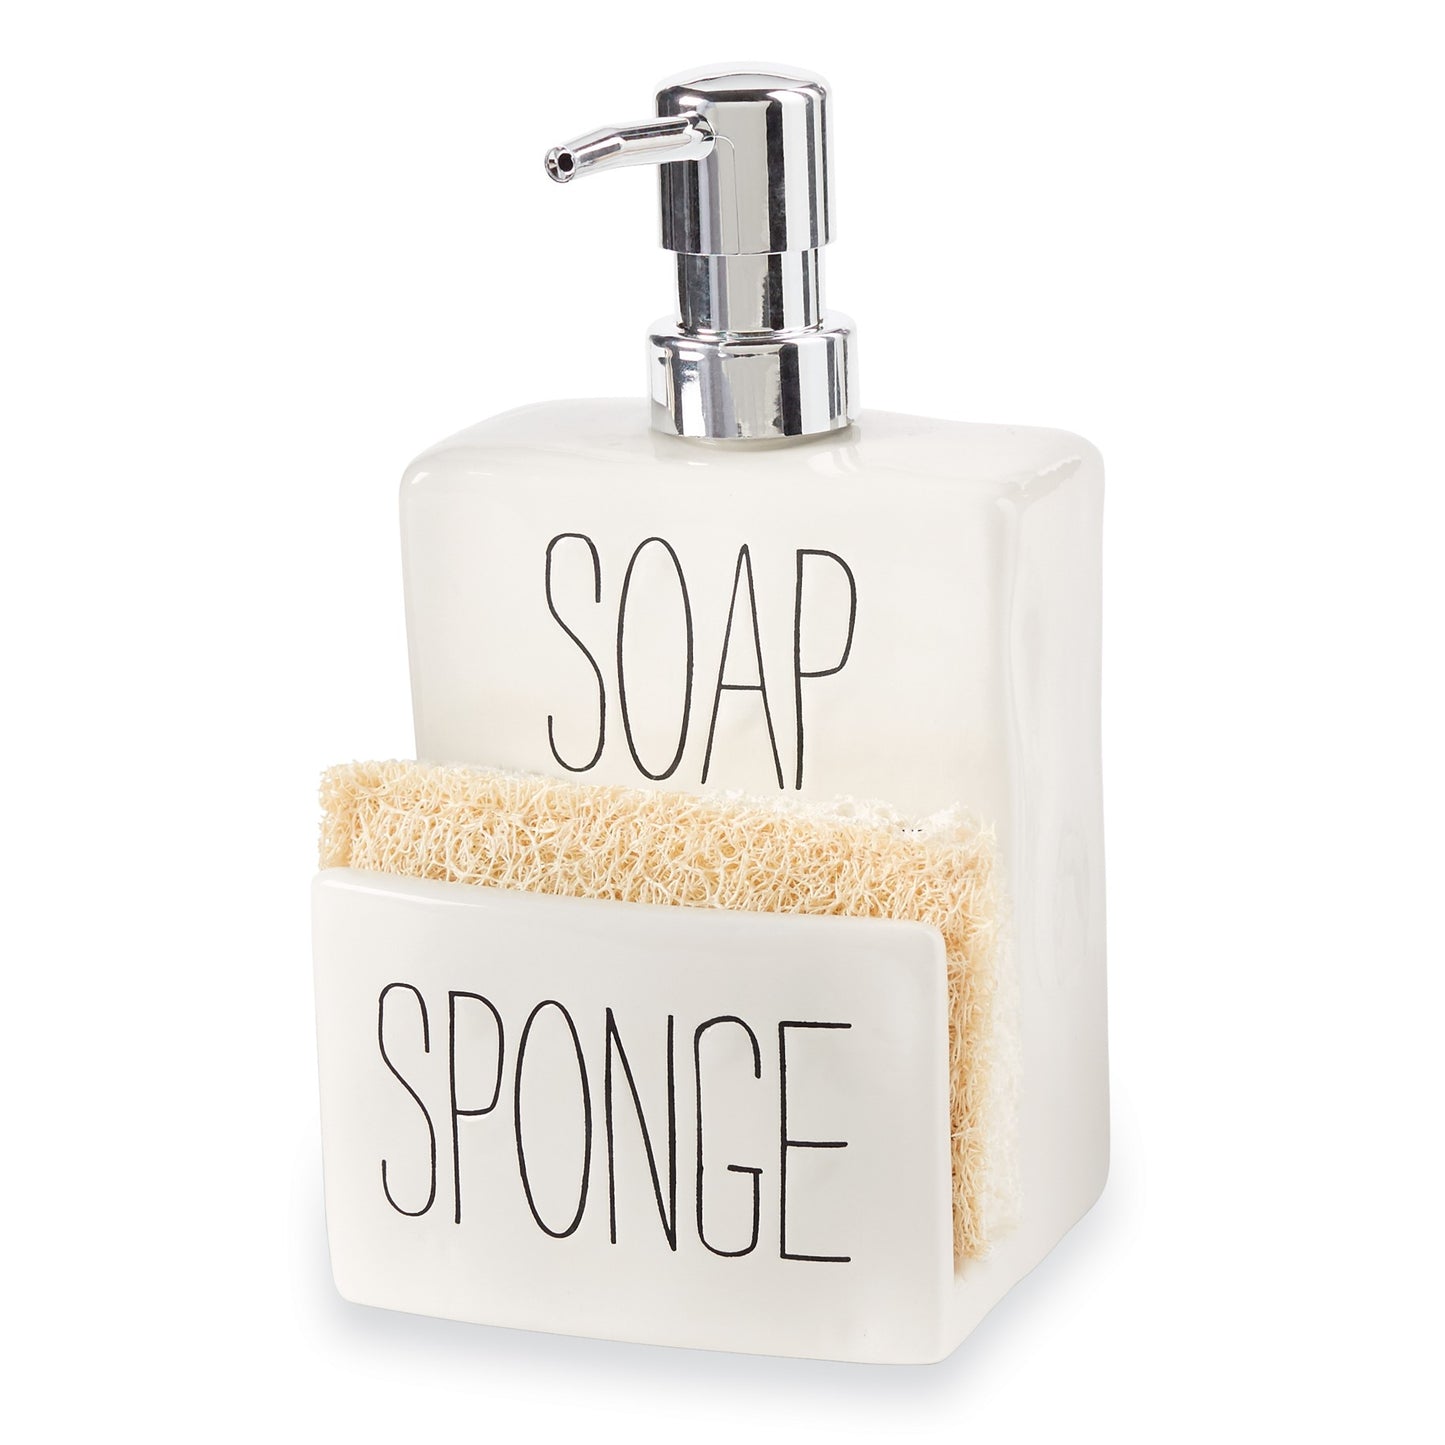 SOAP PUMP SPONGE HOLDER